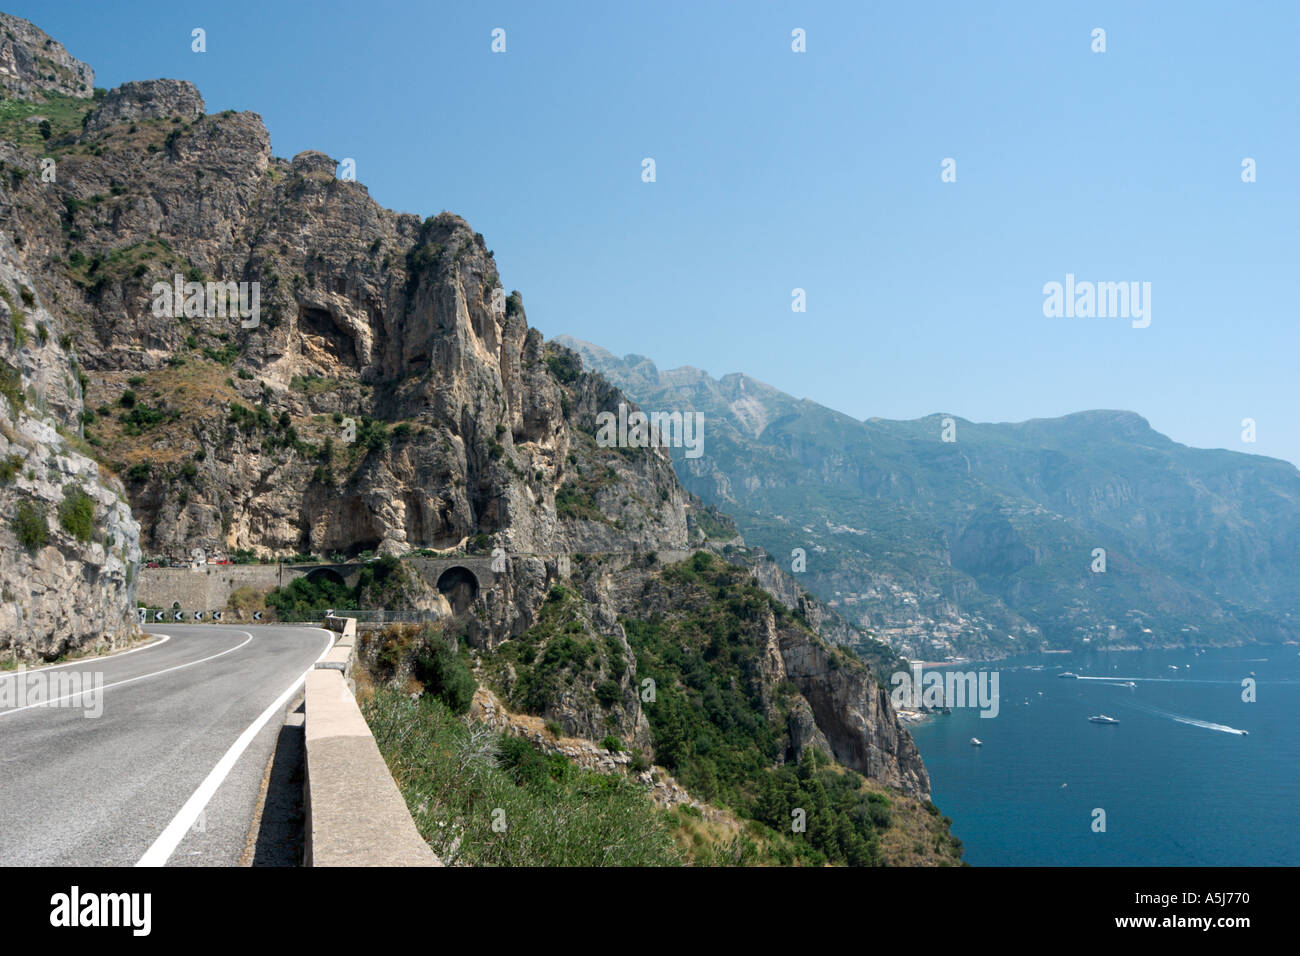 Costa de Amalfi (Costiera Amalfitana) cerca de Positano, Riviera Napolitana, Italia Foto de stock